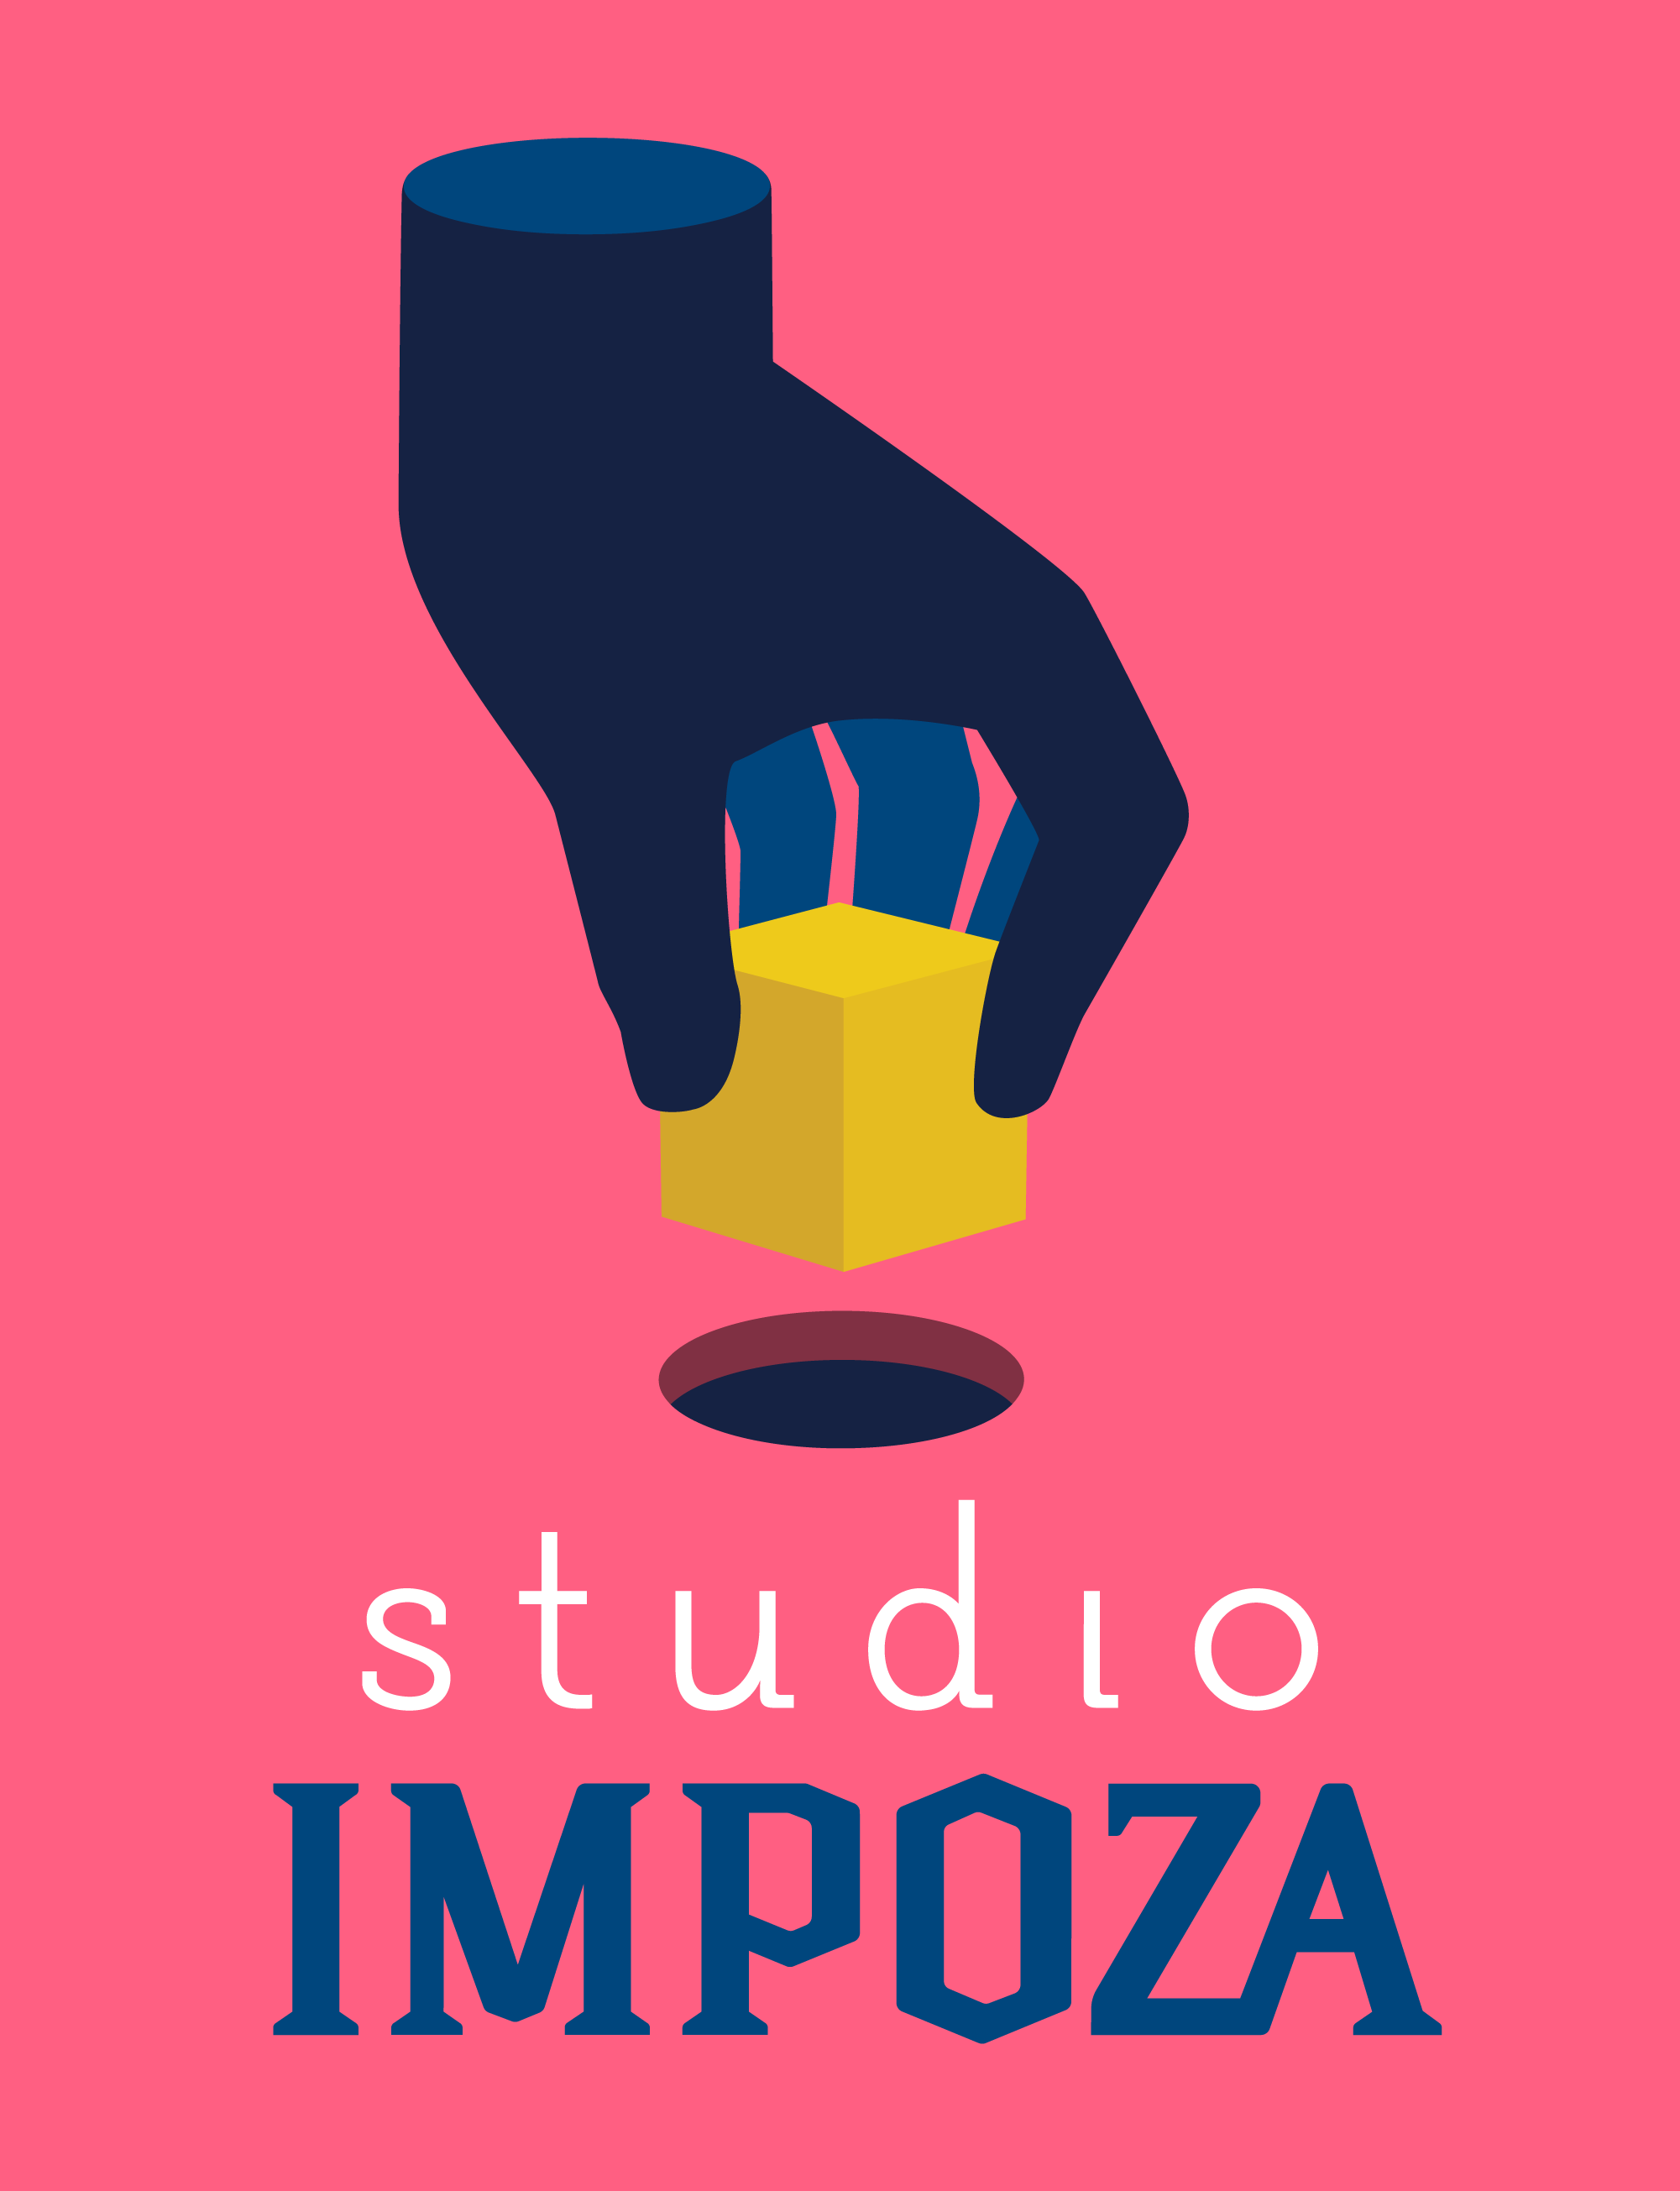 Studio IMPOZA